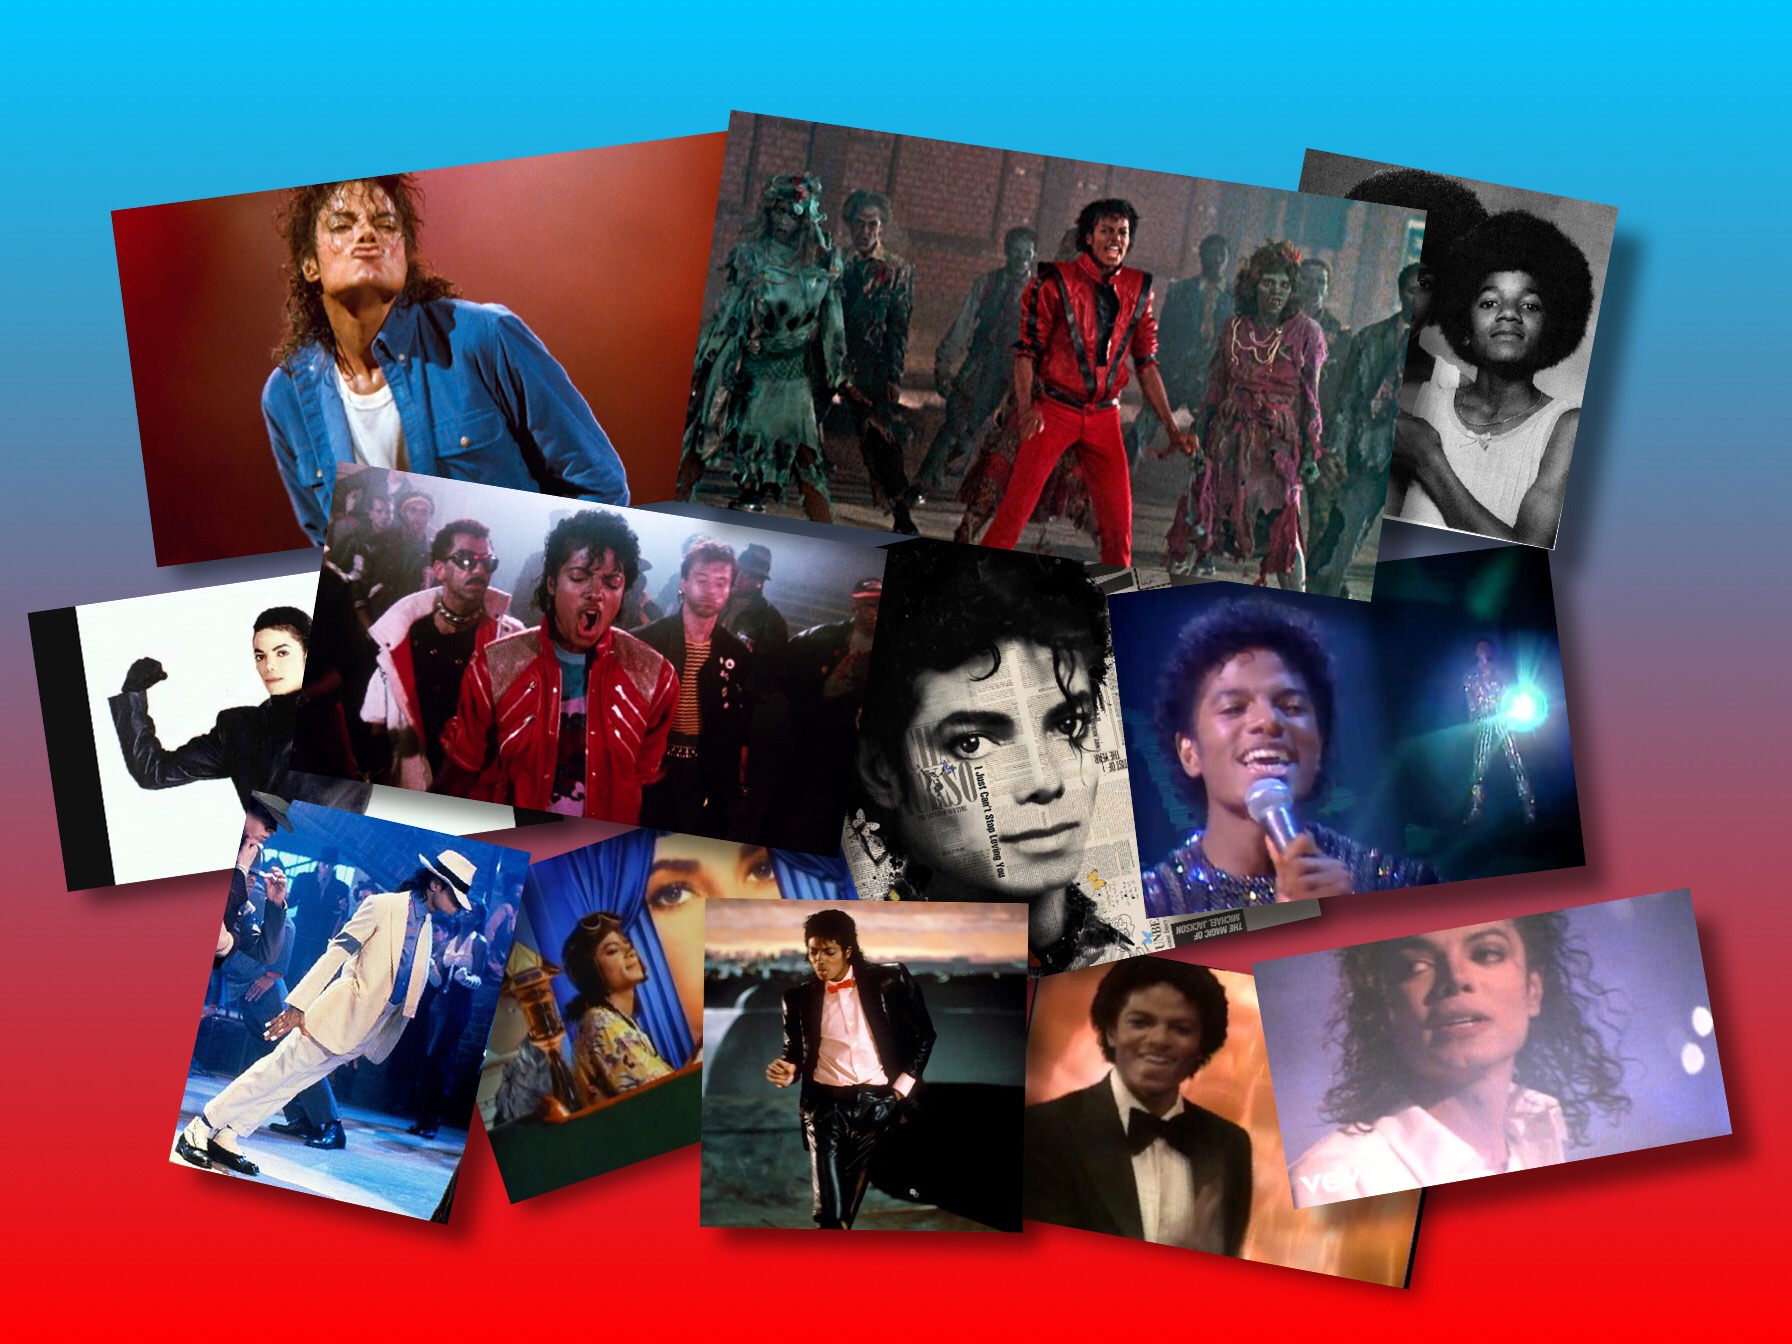 50 Best Michael Jackson Songs